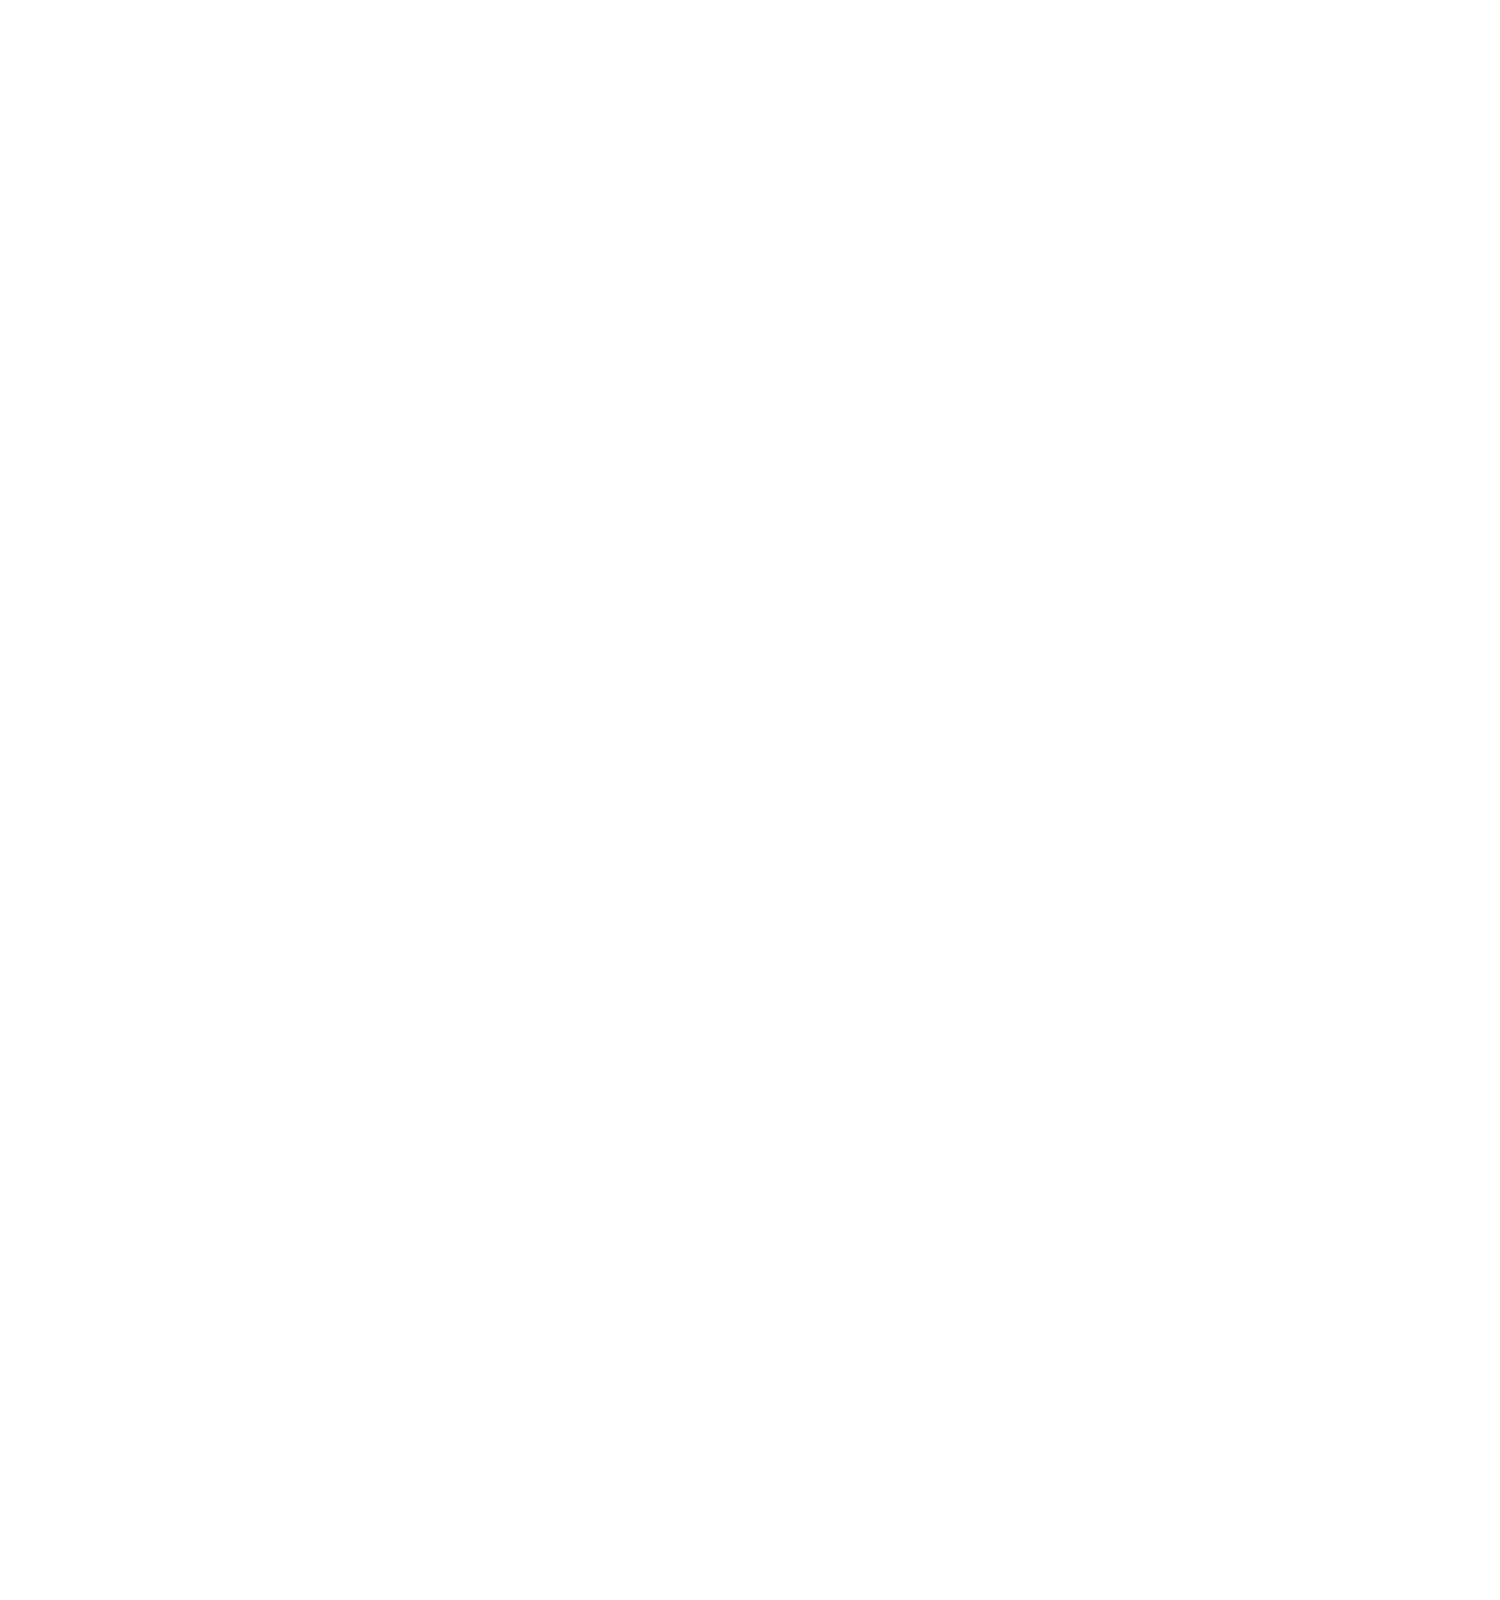 Statesboro High School Marching Band